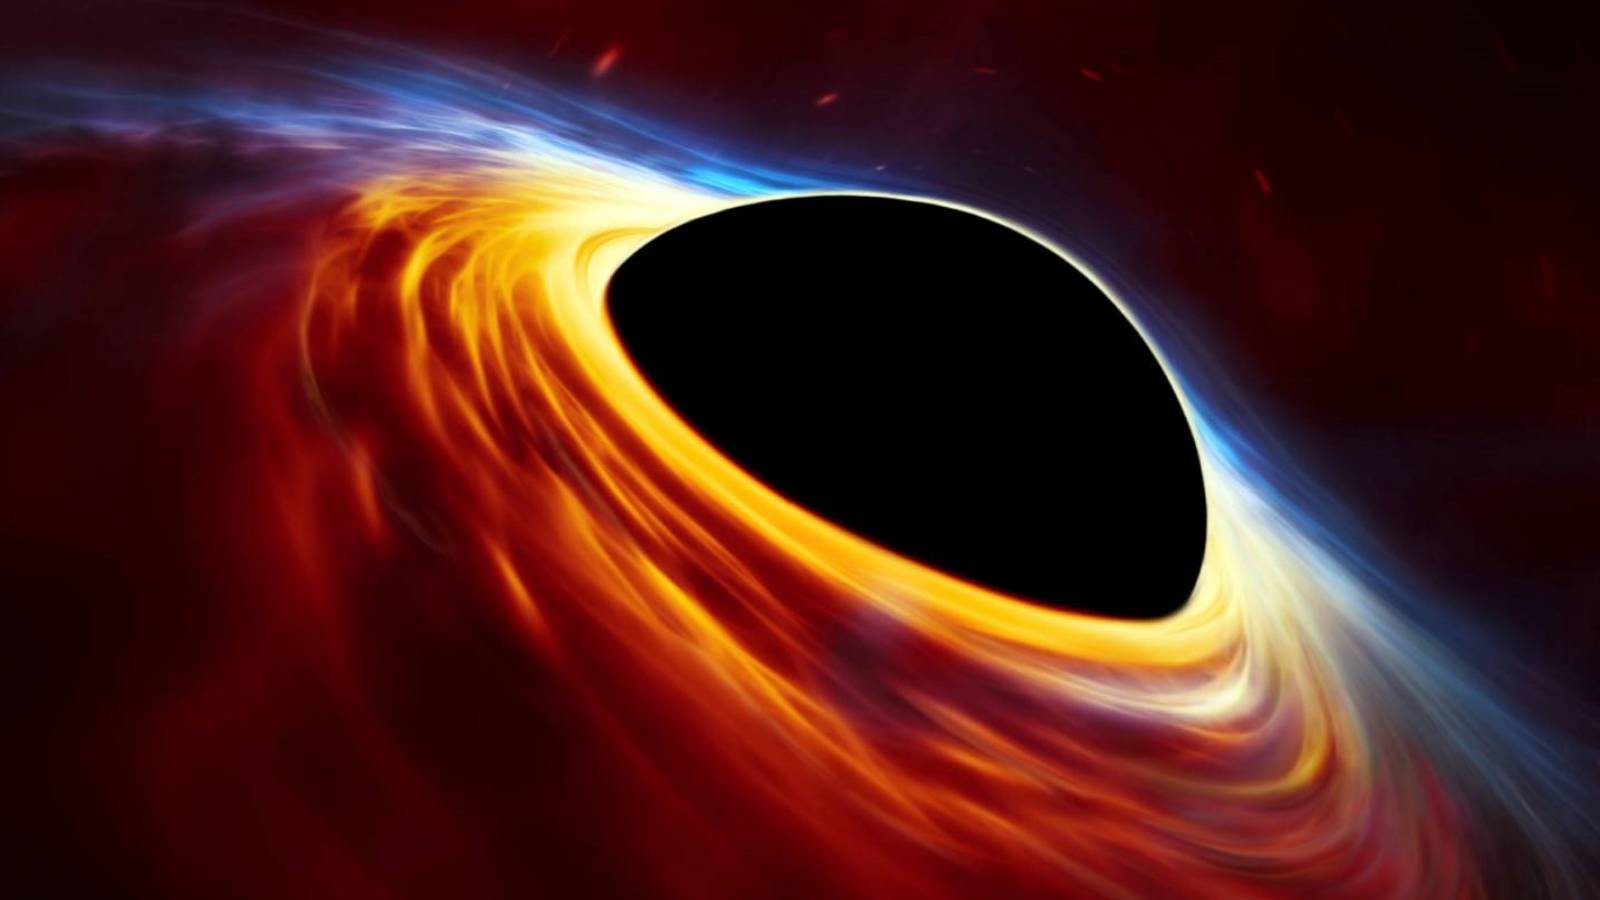 Black hole universes